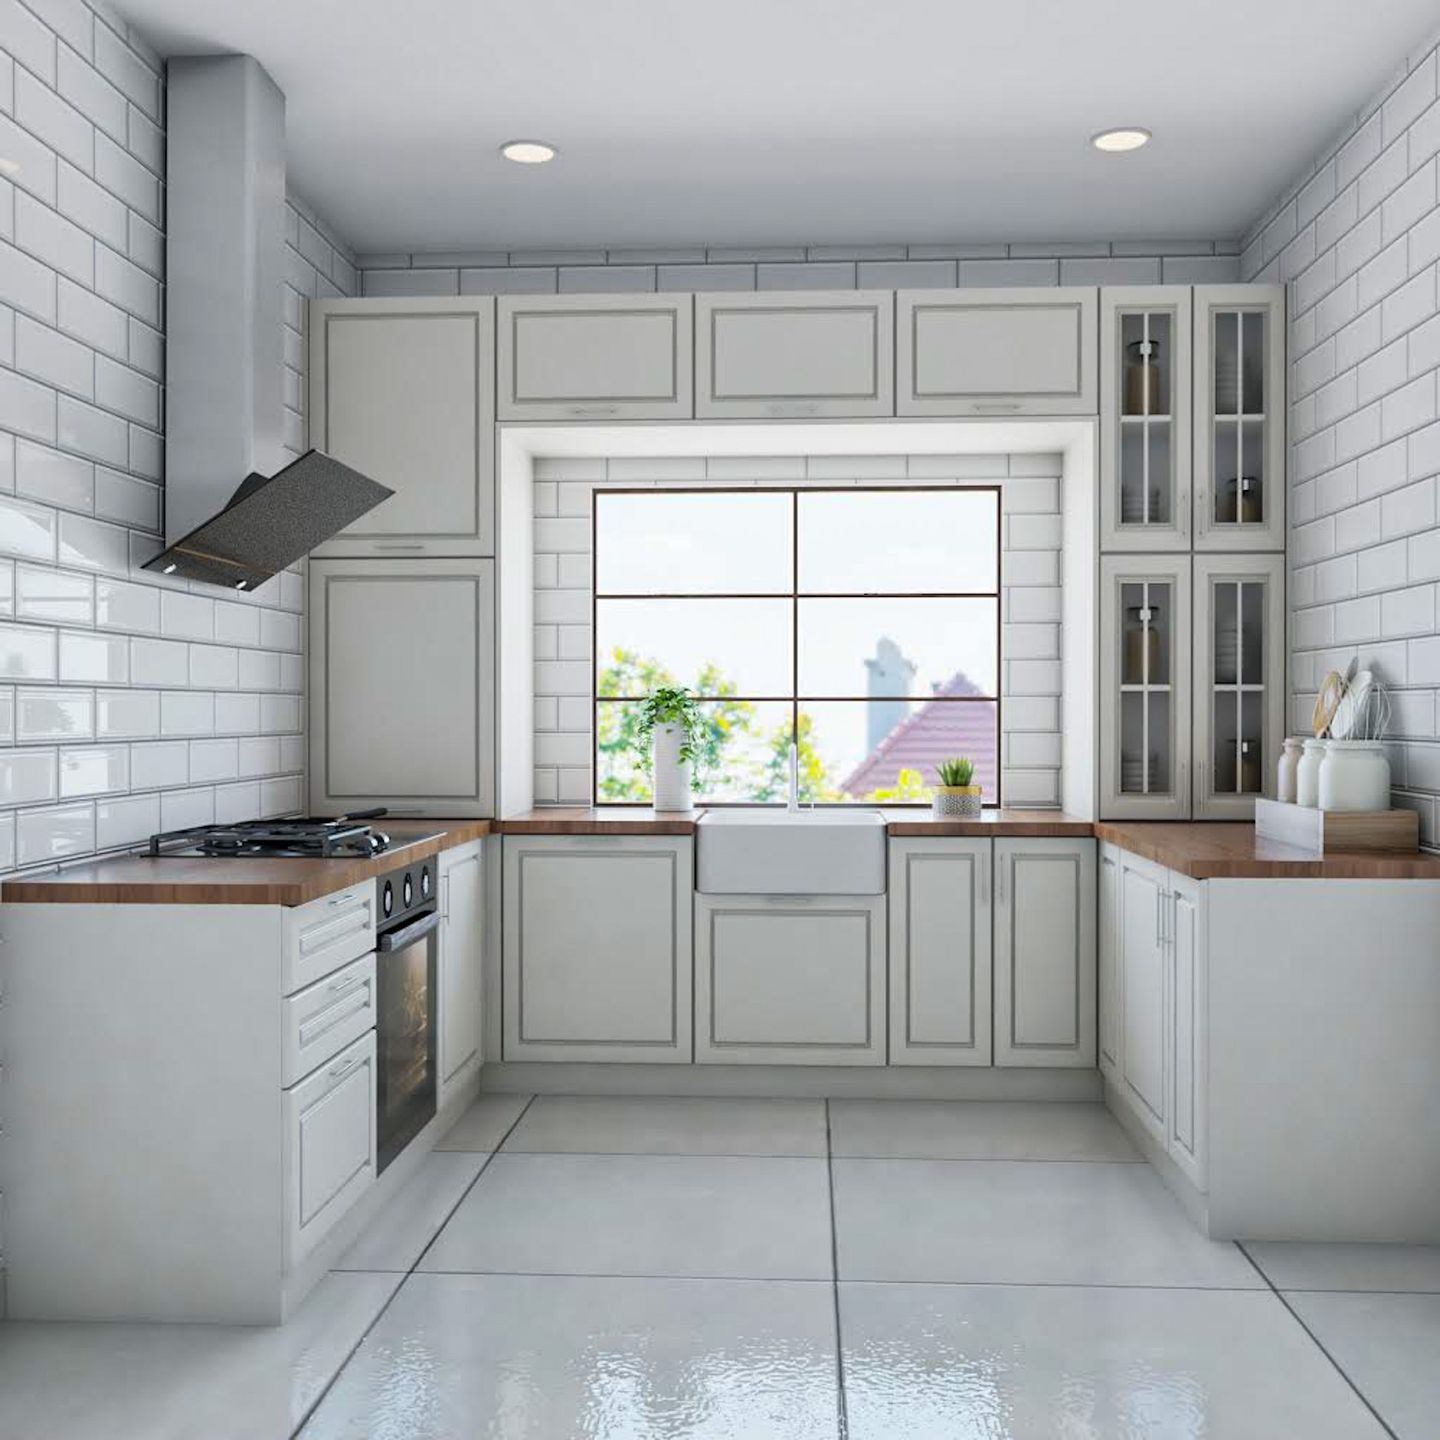 All-White U-Shaped Kitchen With White Subway Tiles - Livspace